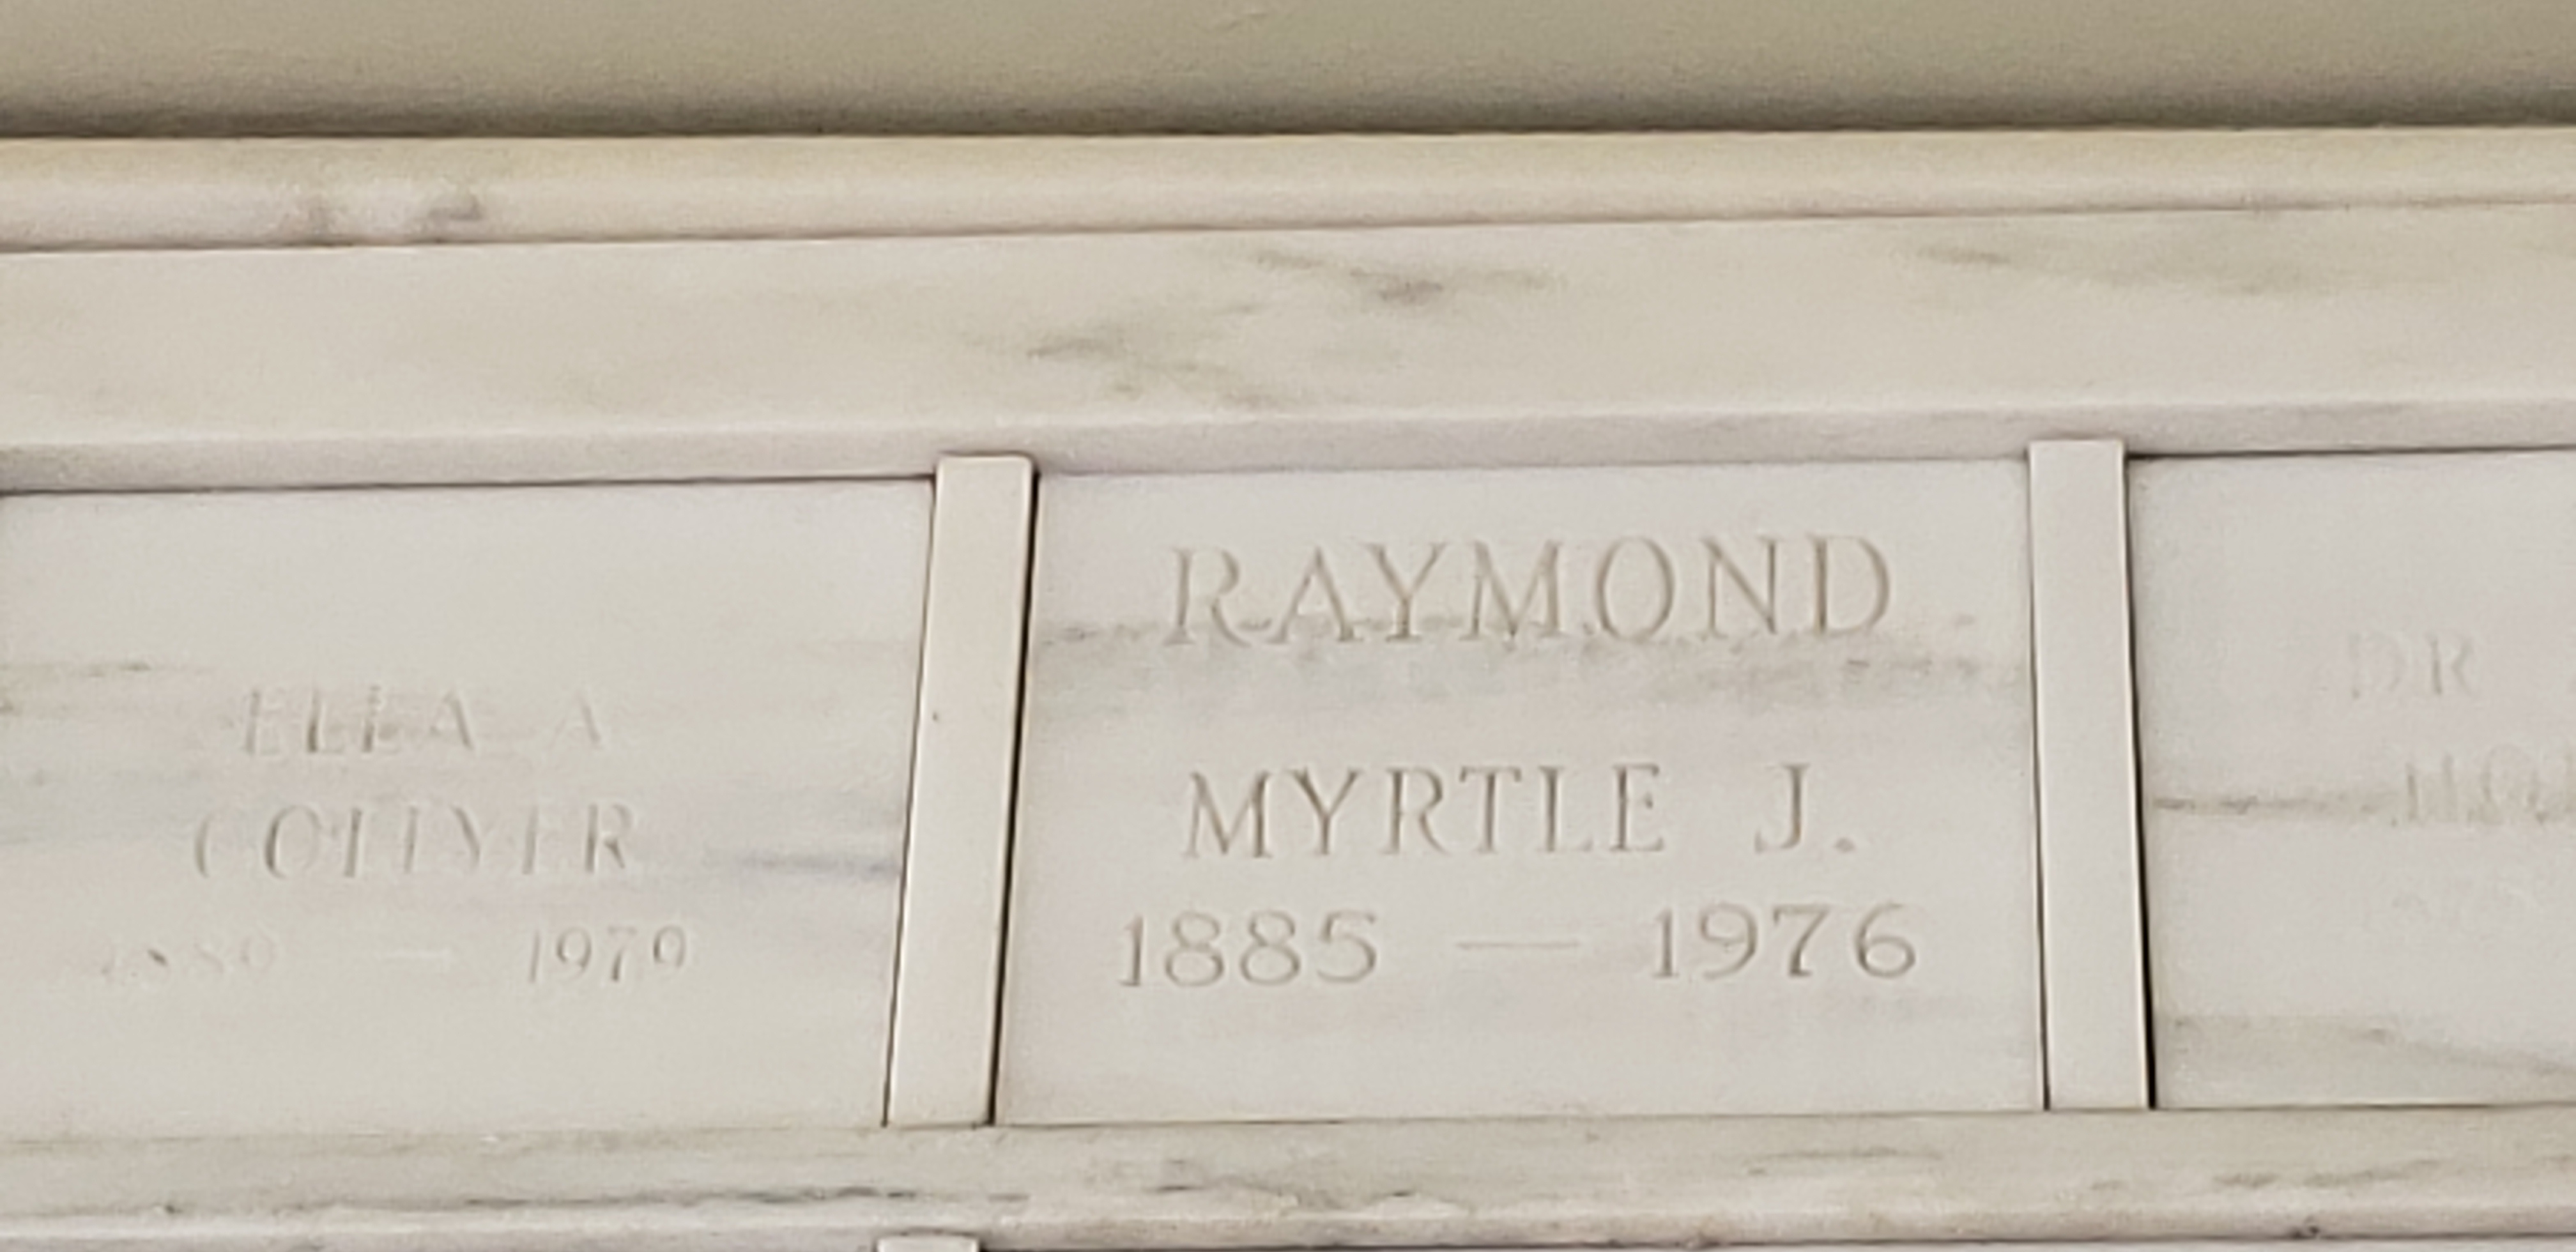 Myrtle J Raymond